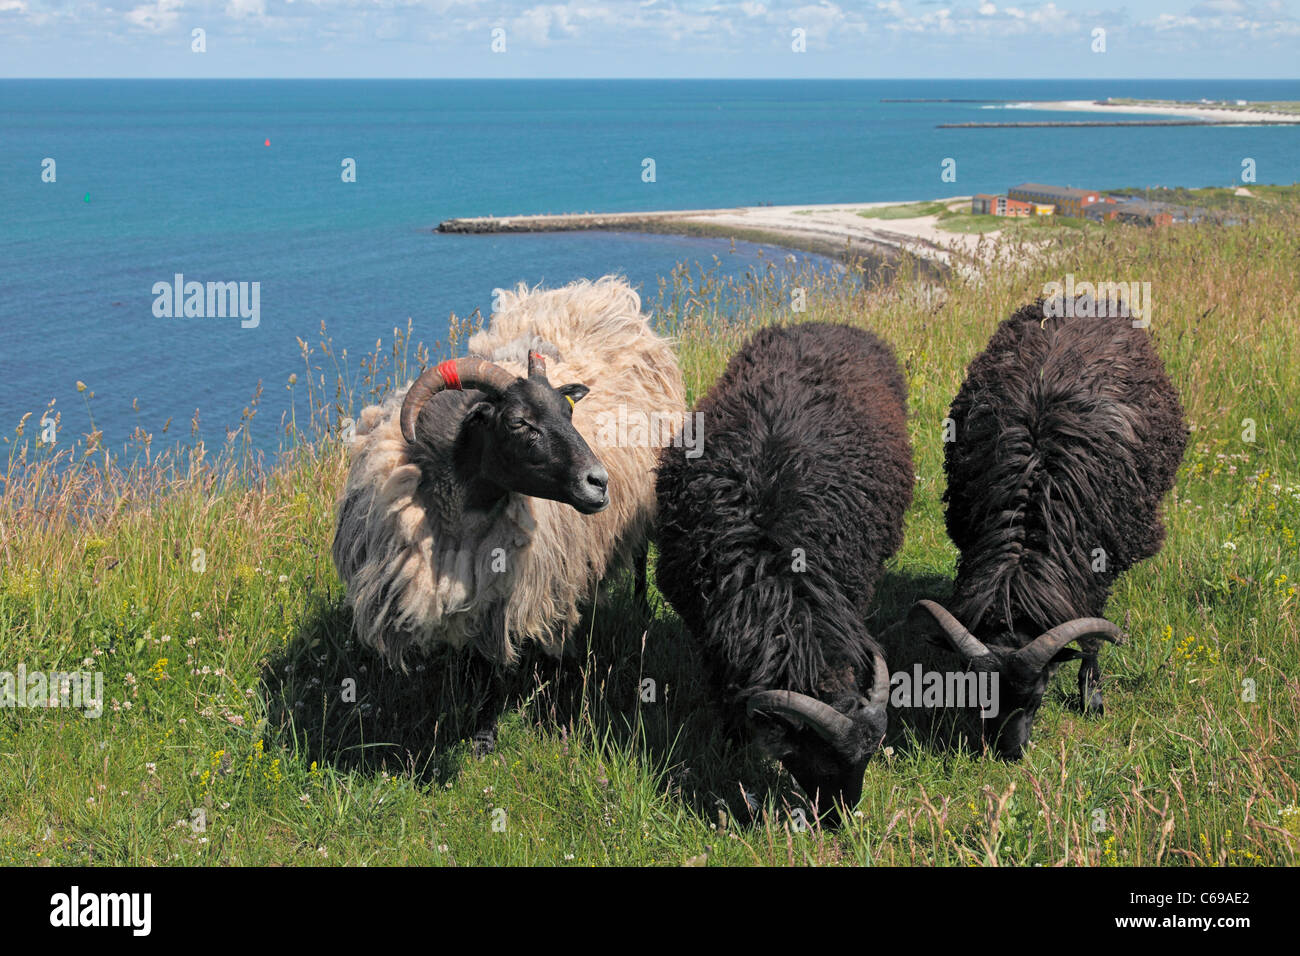 Moorland sheep on Heligoland; Graue gehörnte Heidschnucke auf Helgoland Stock Photo